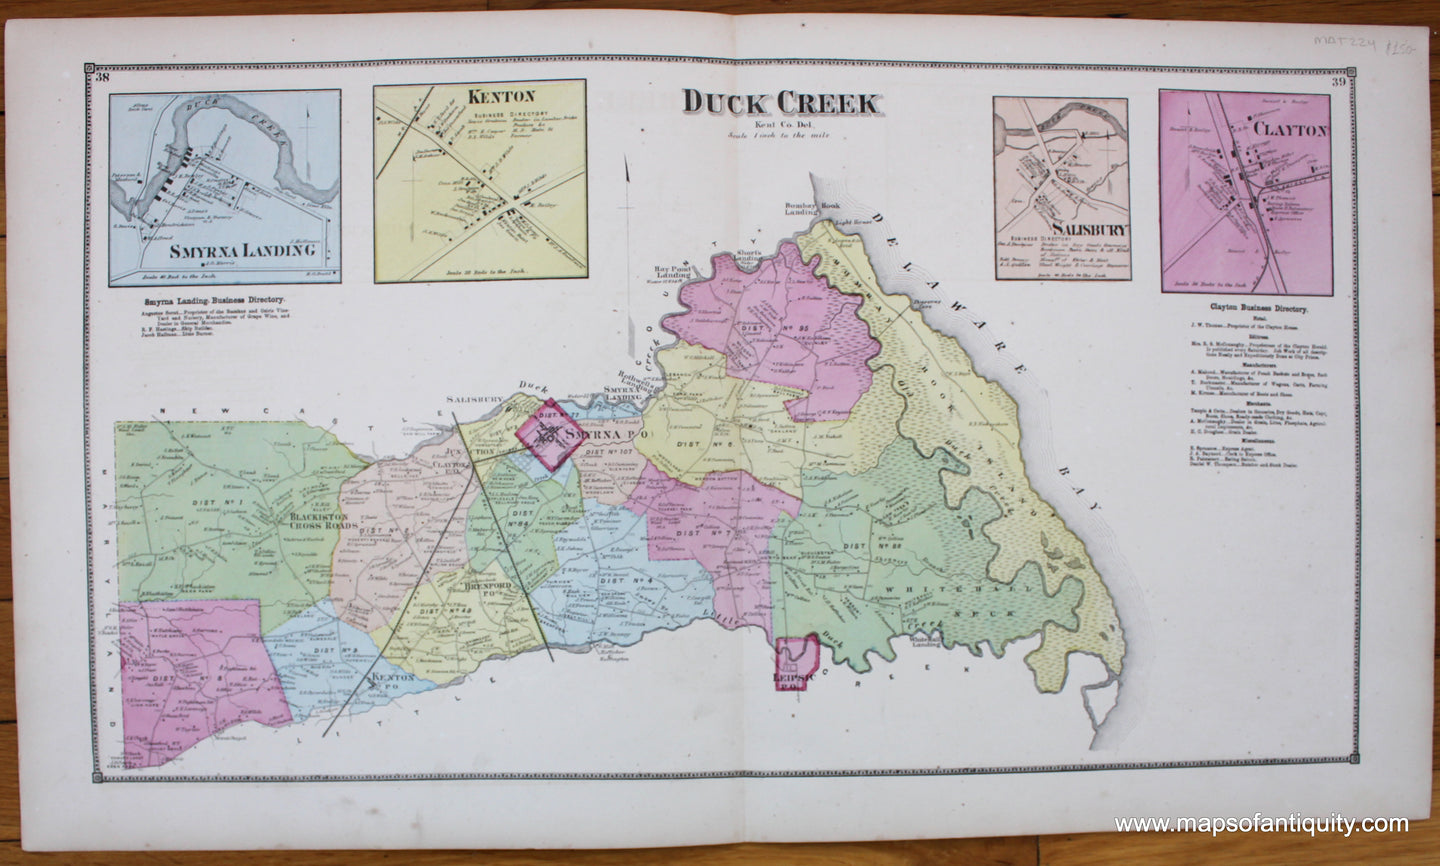 Duck-Creek-Kent-Co.-Del.-Smyrna-Landing.-Kenton.-Salisbury.-Clayton.-Antique-Map-1868-Beers-1860s-1800s-19th-century-Maps-of-Antiquity